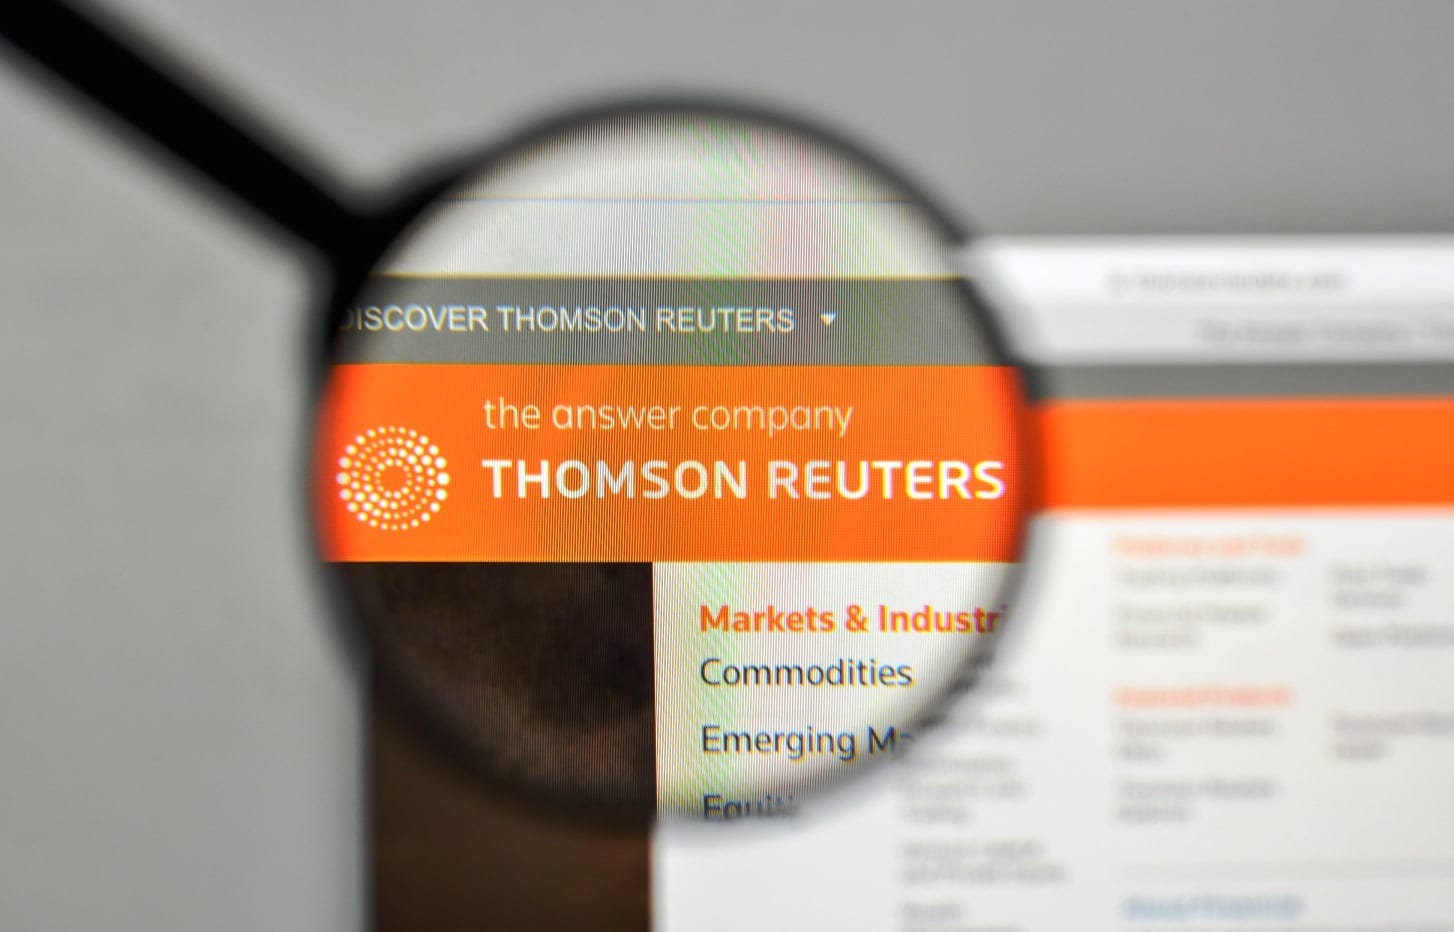 Thomson reuters forex